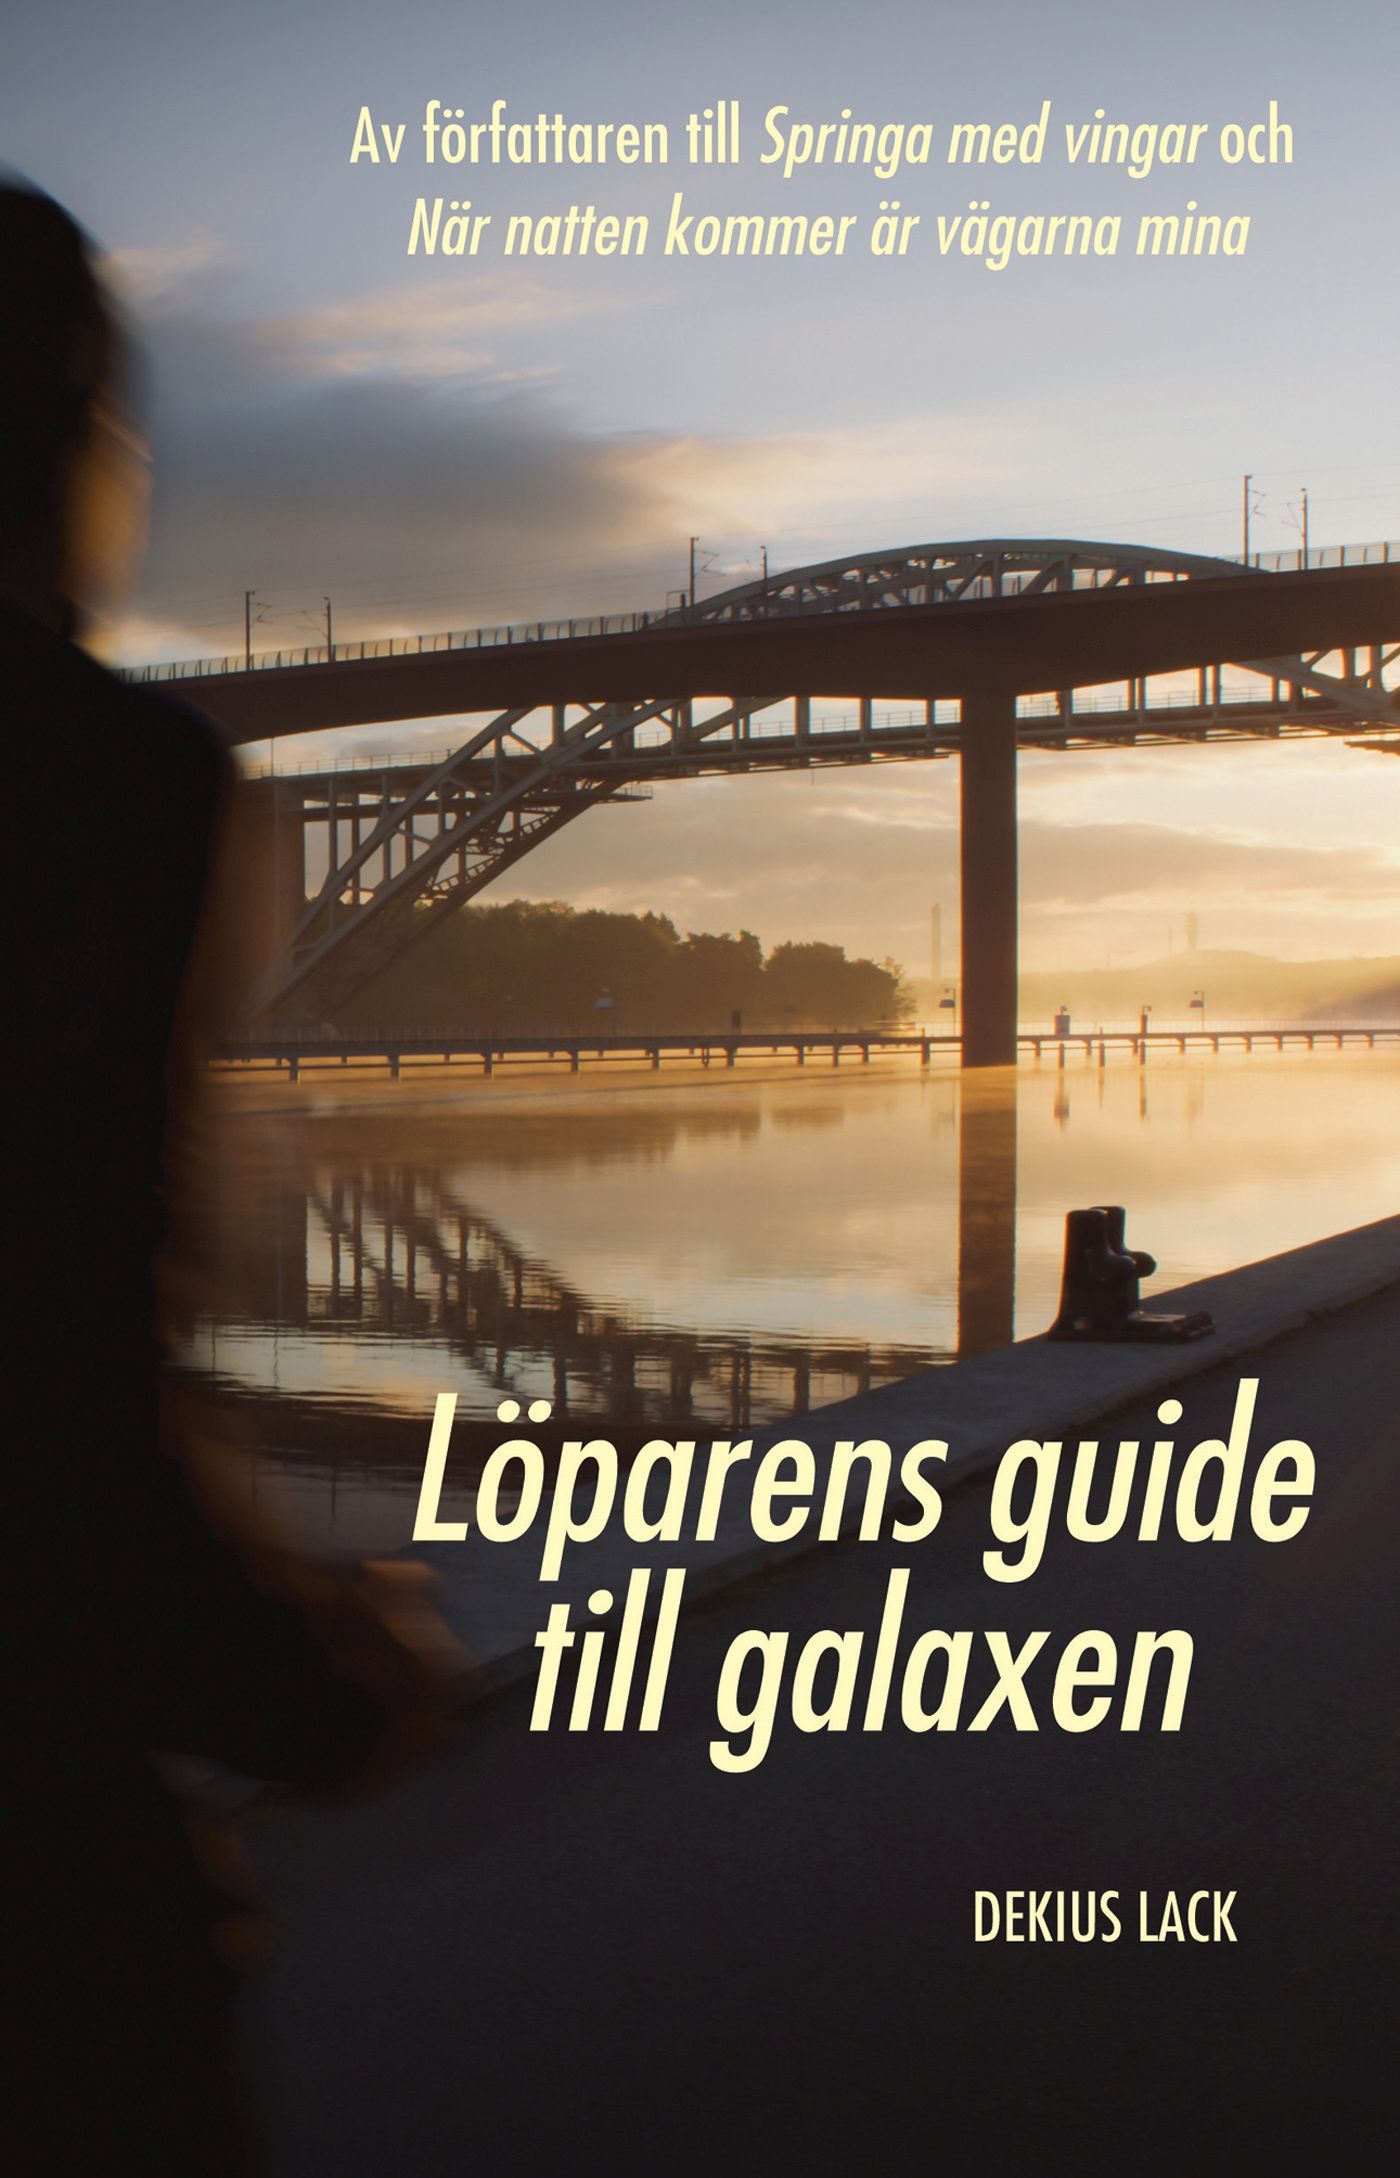 Löparens guide till galaxen, e-bog af Dekius Lack